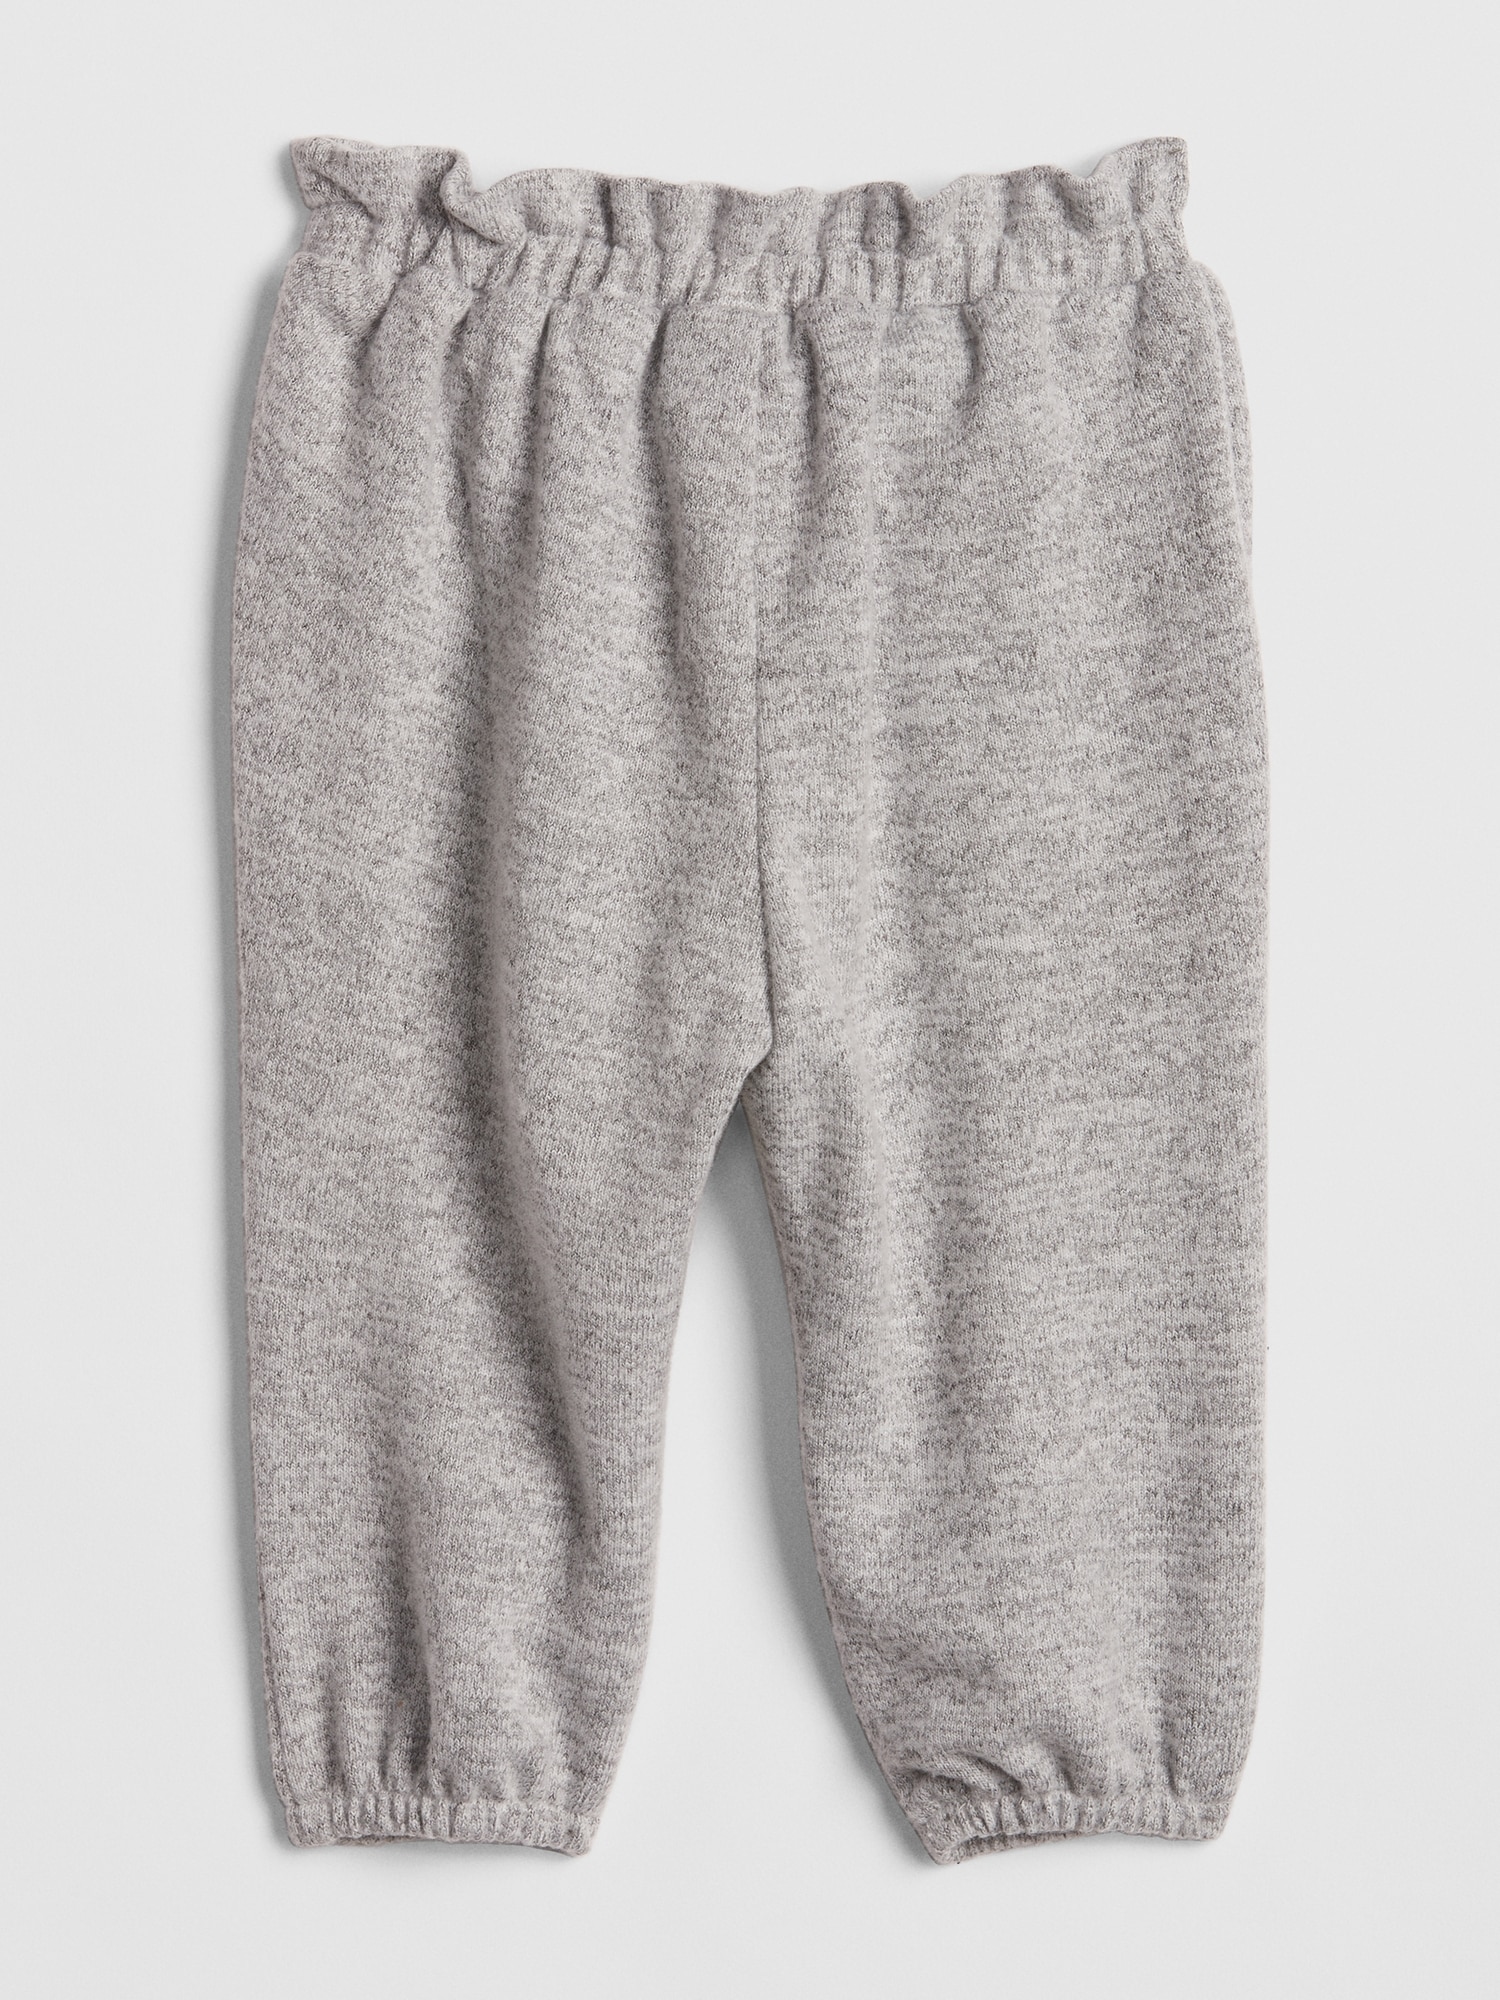 Softspun Pull-On Pants | Gap